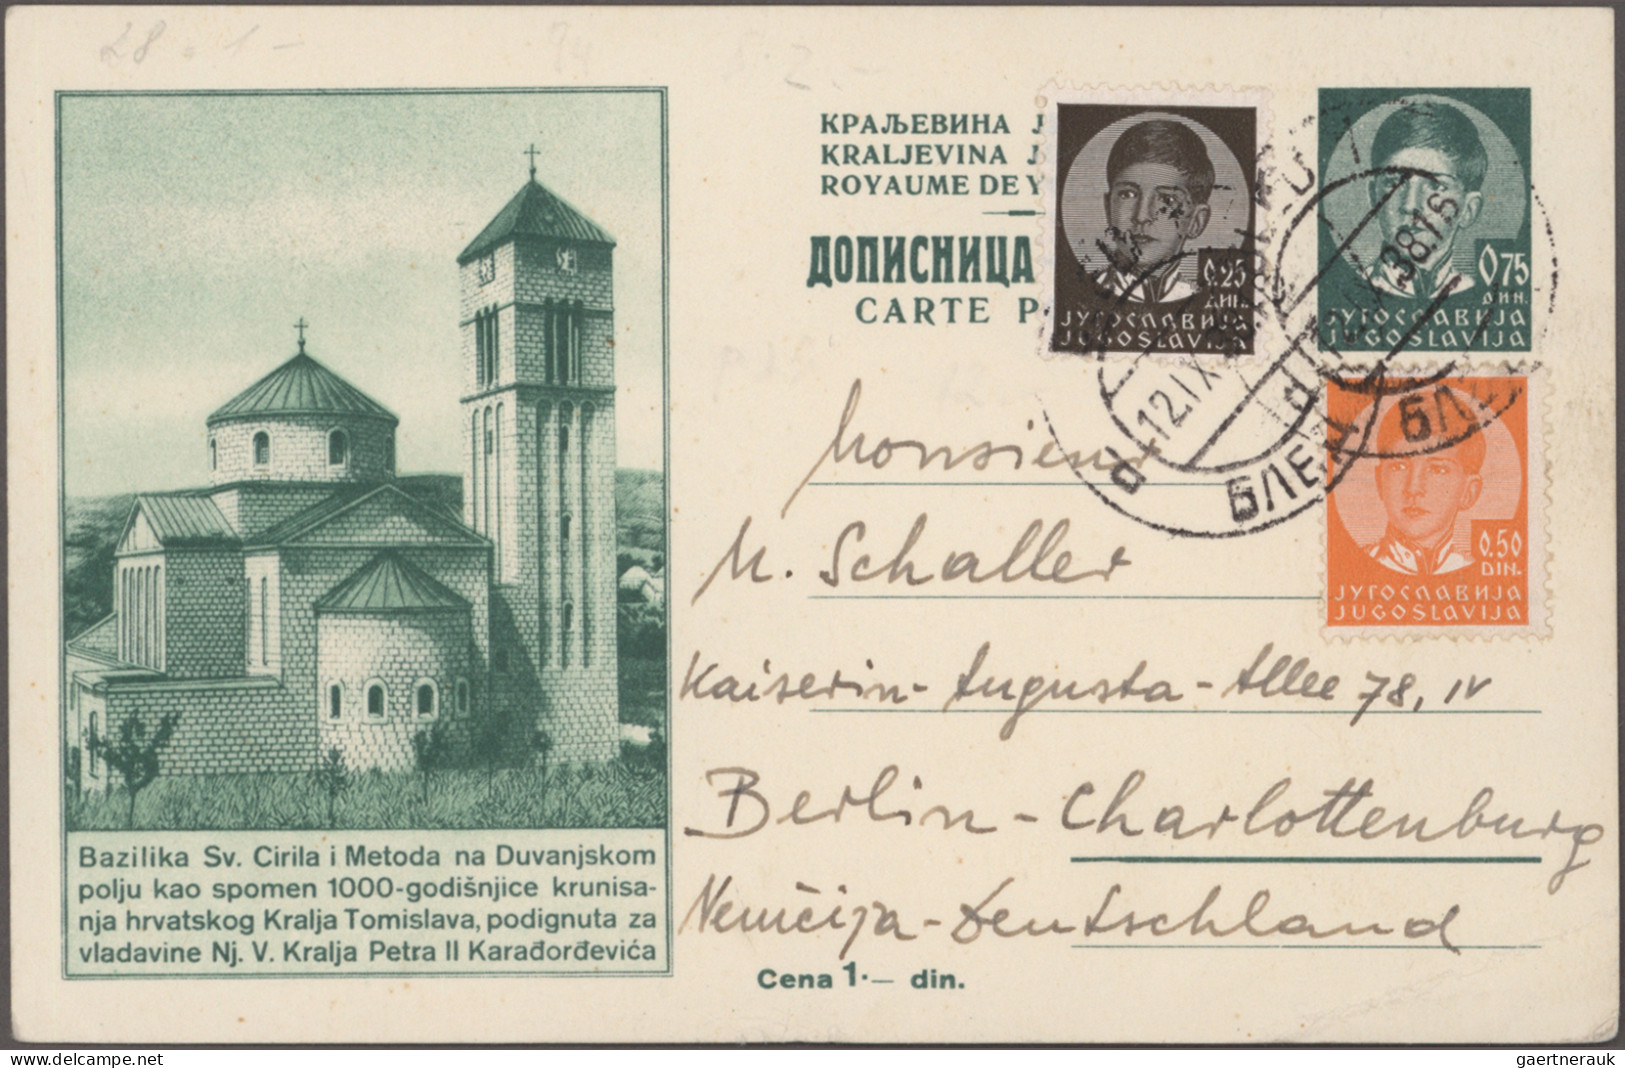 Yugoslavia - postal stationery: 1933-1938 - postal stationery picture postcards: